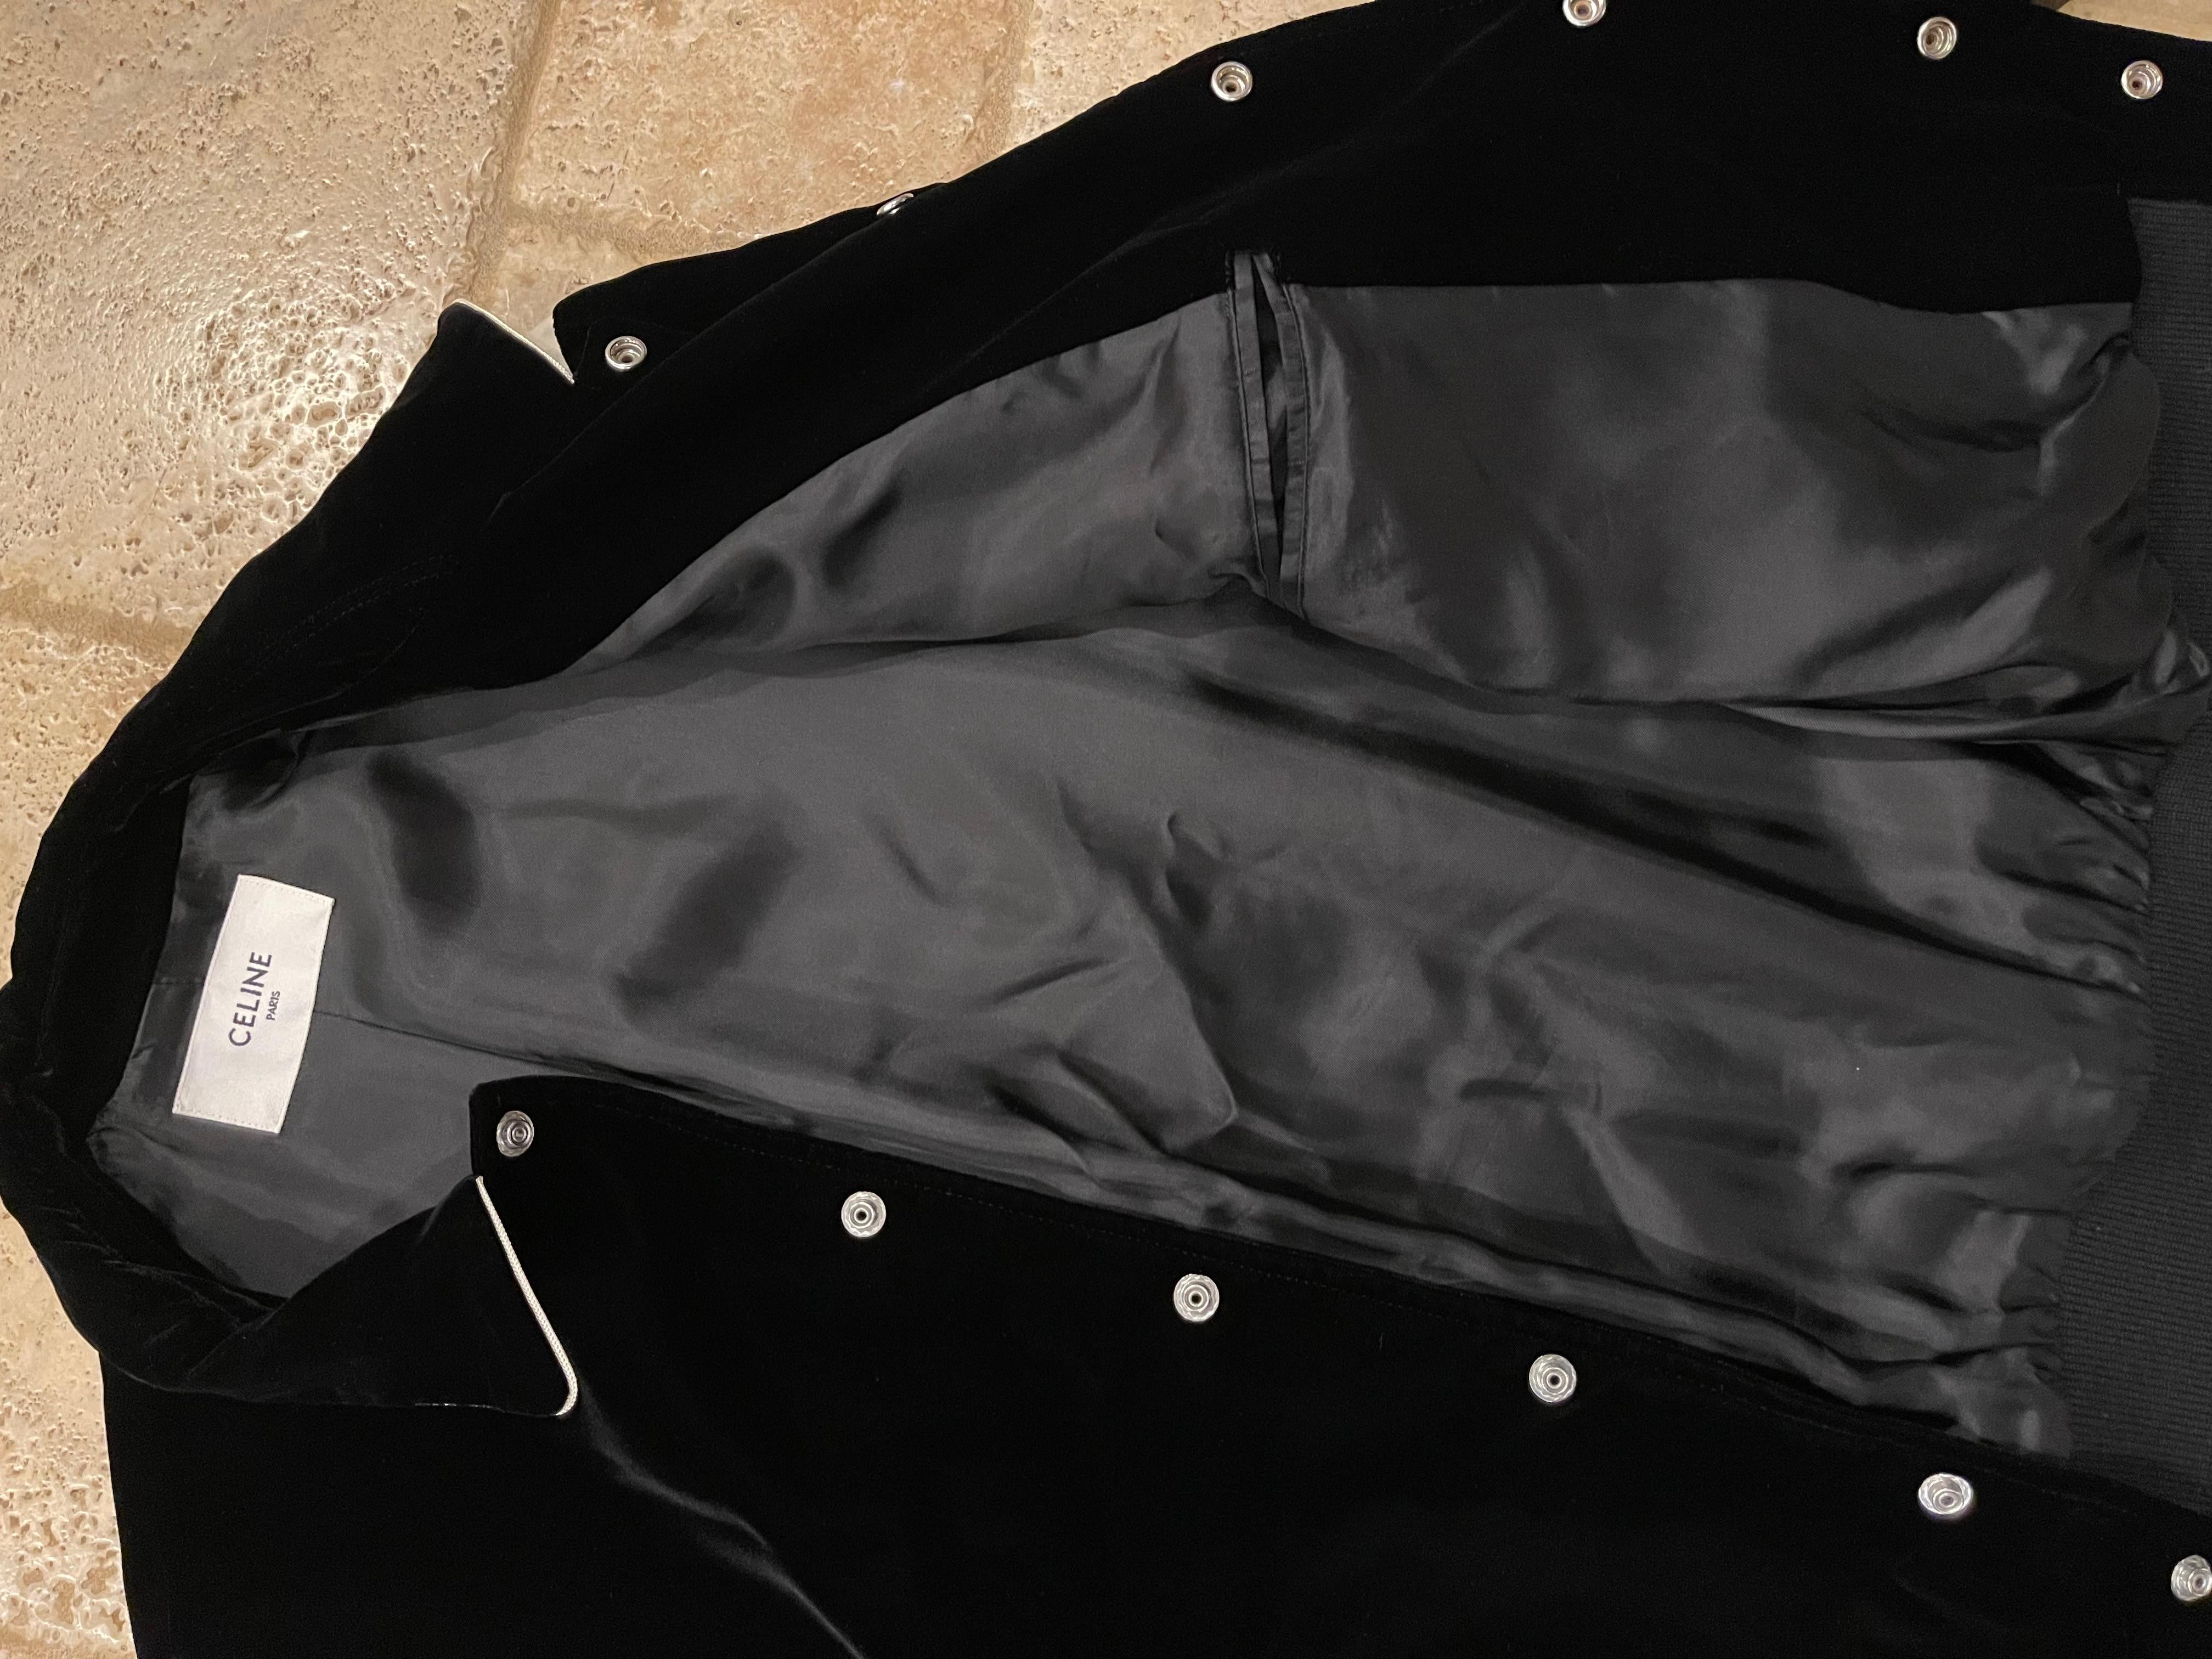 Celine Hedi Slimane Black Velvet Teddy Varsity Jacket RARE size 48 8